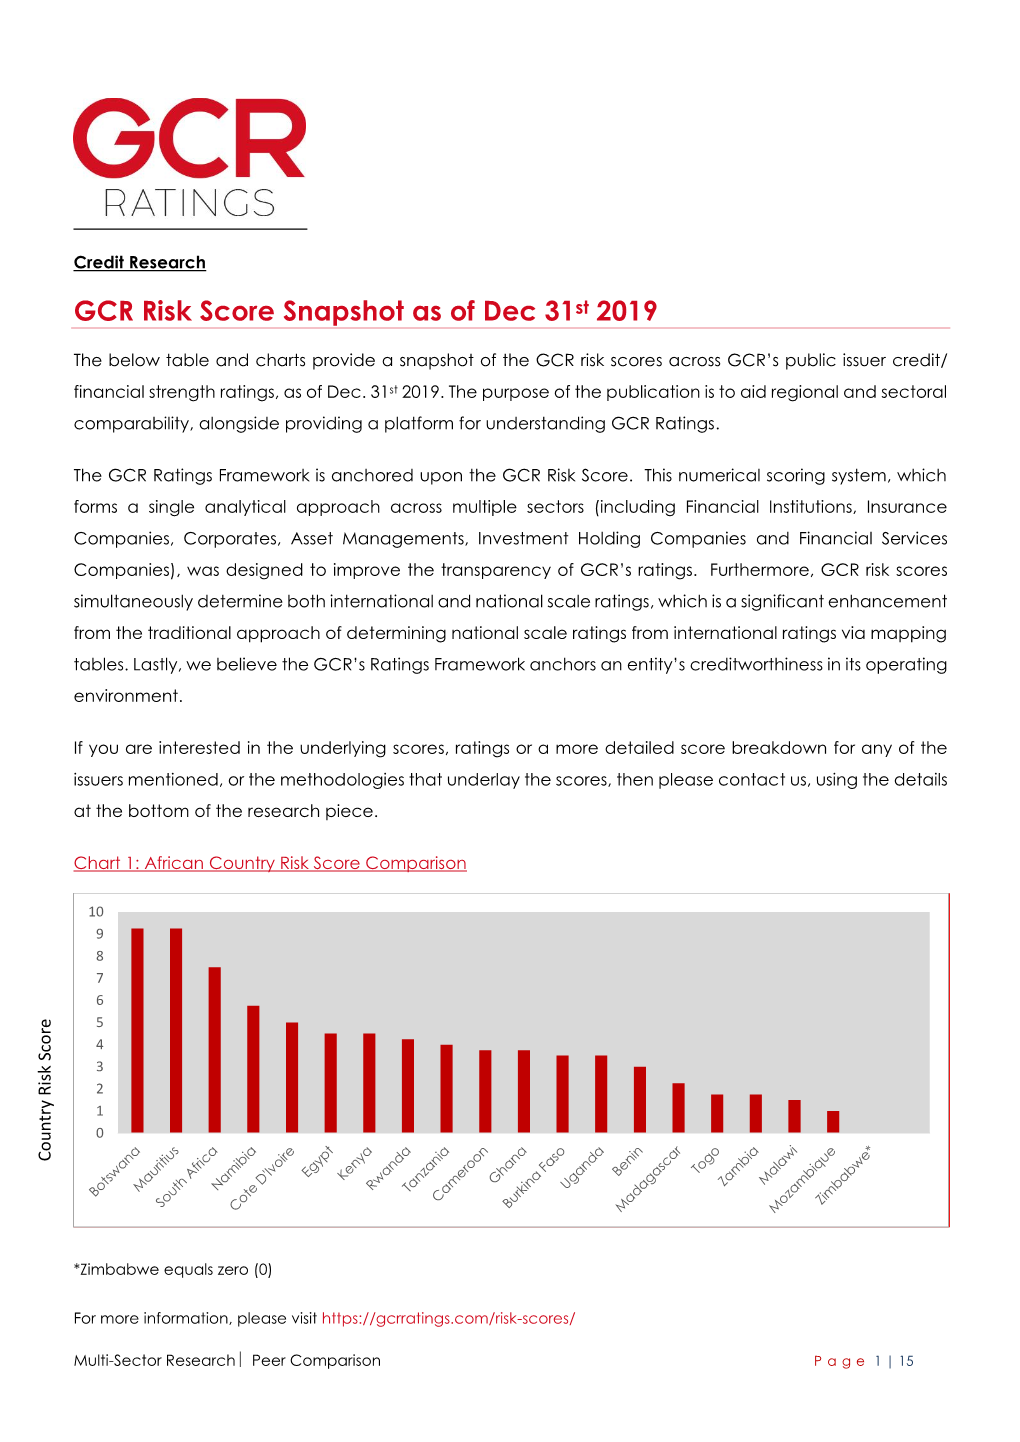 GCR Risk Score Snapshot As of Dec 31St 2019